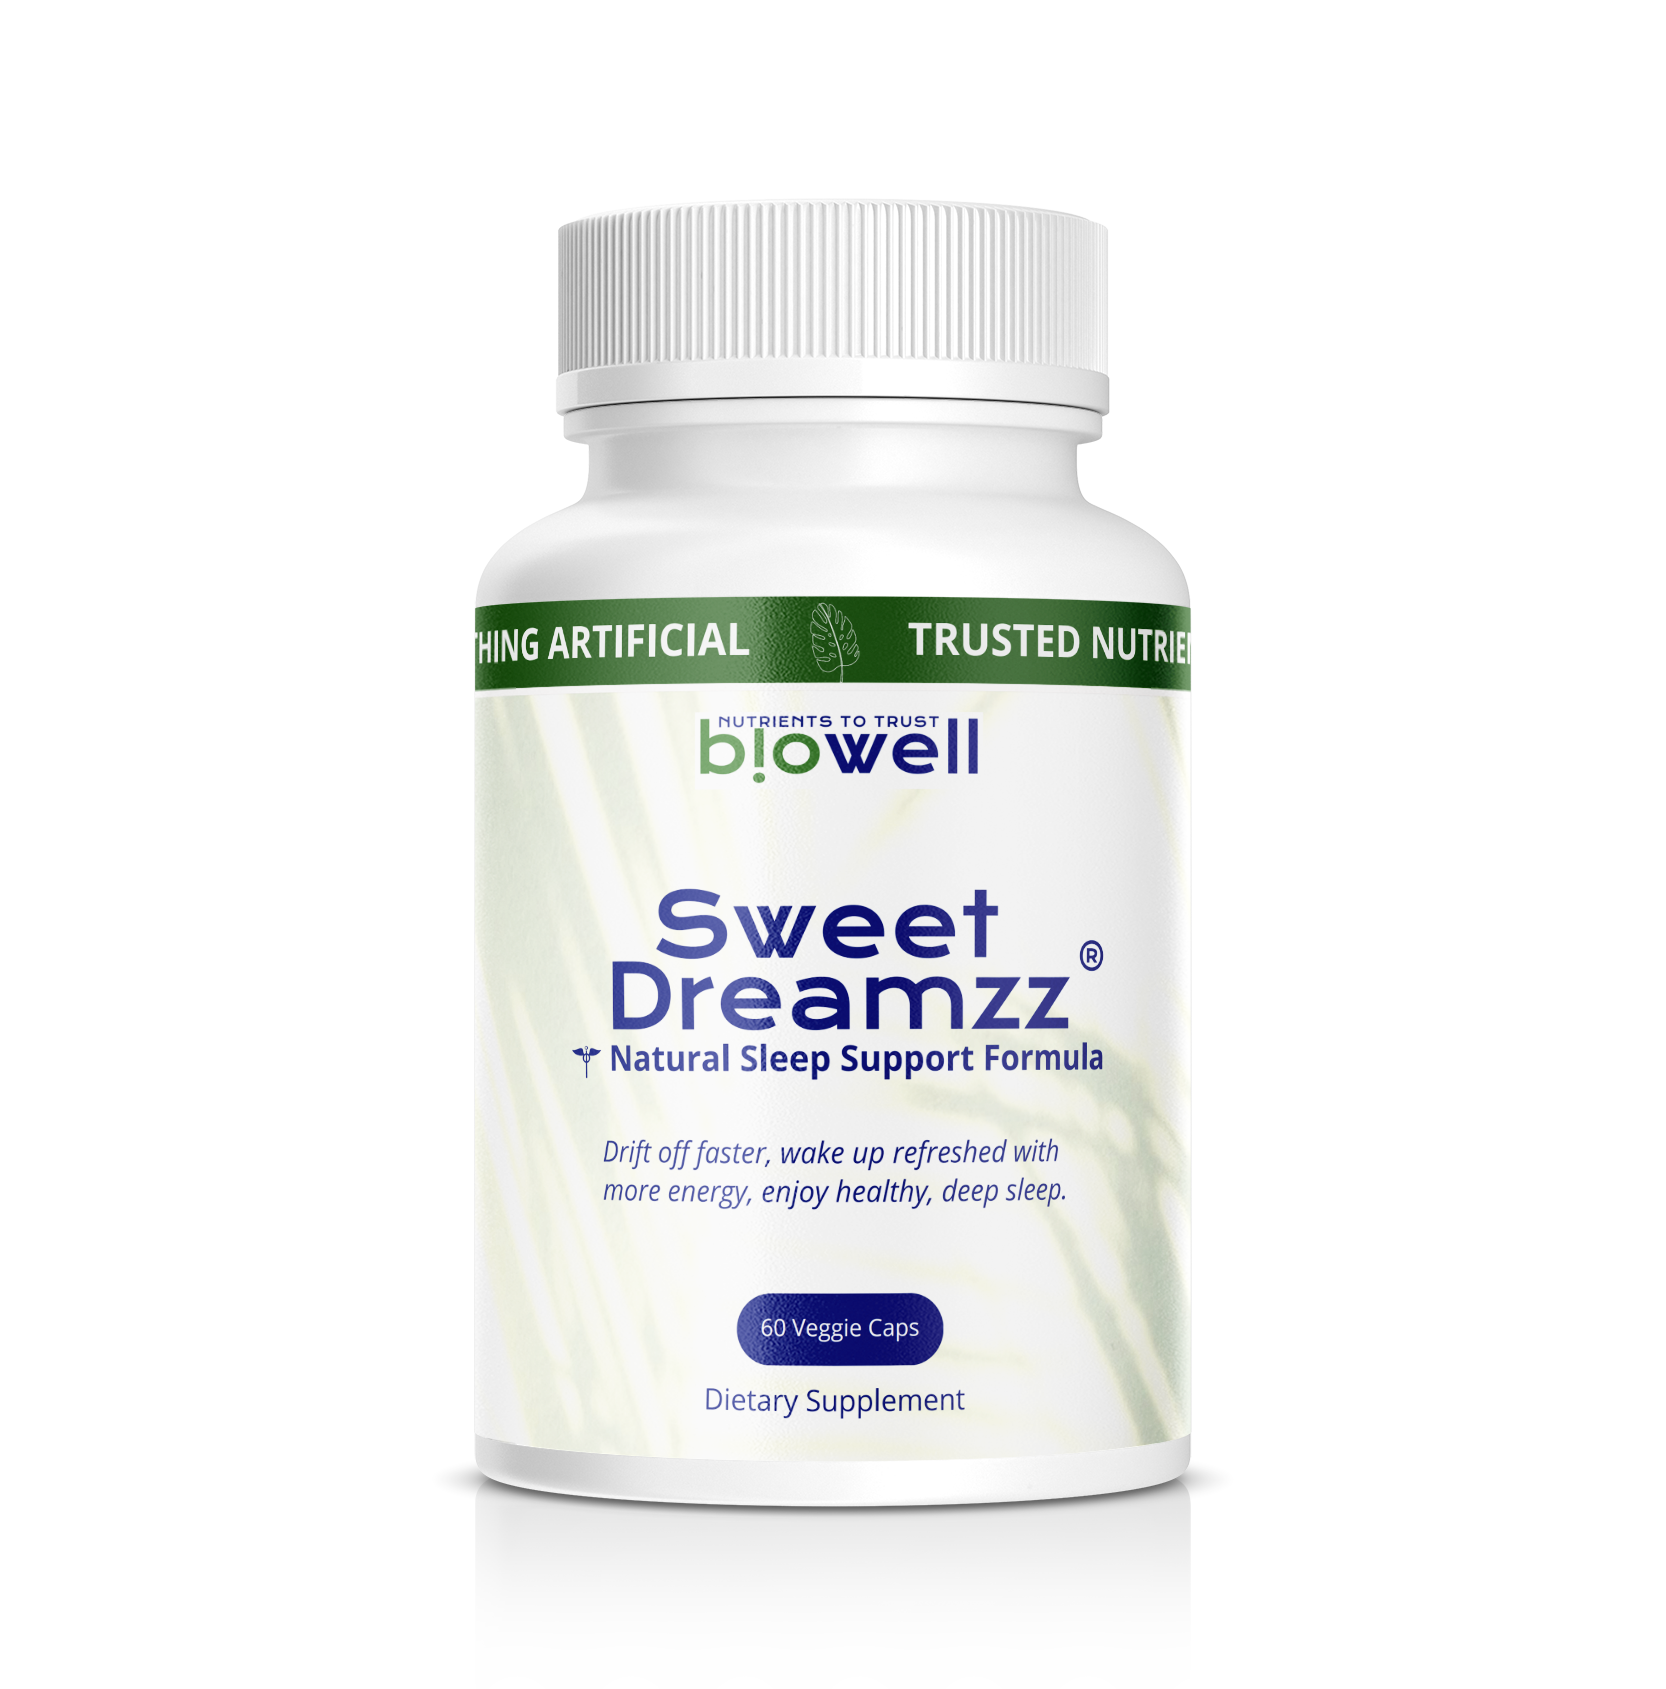 SweetDreamzz® Natural Sleep Support Formula